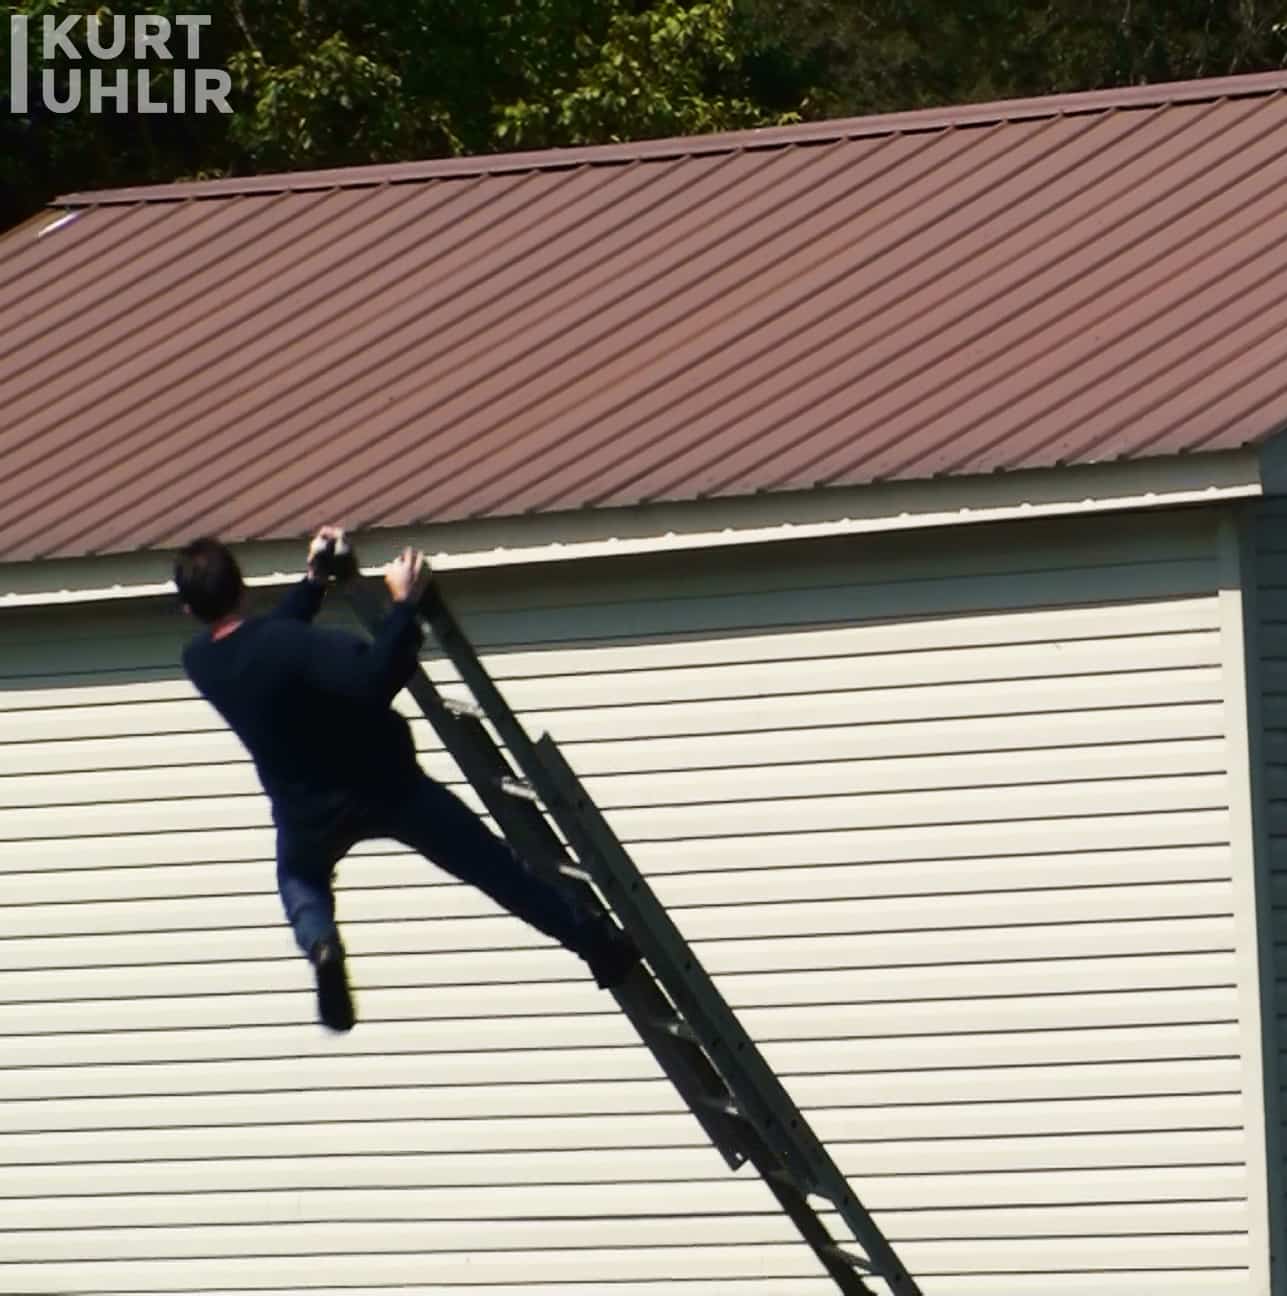 Stuntman Kurt Uhlir falling off a ladder